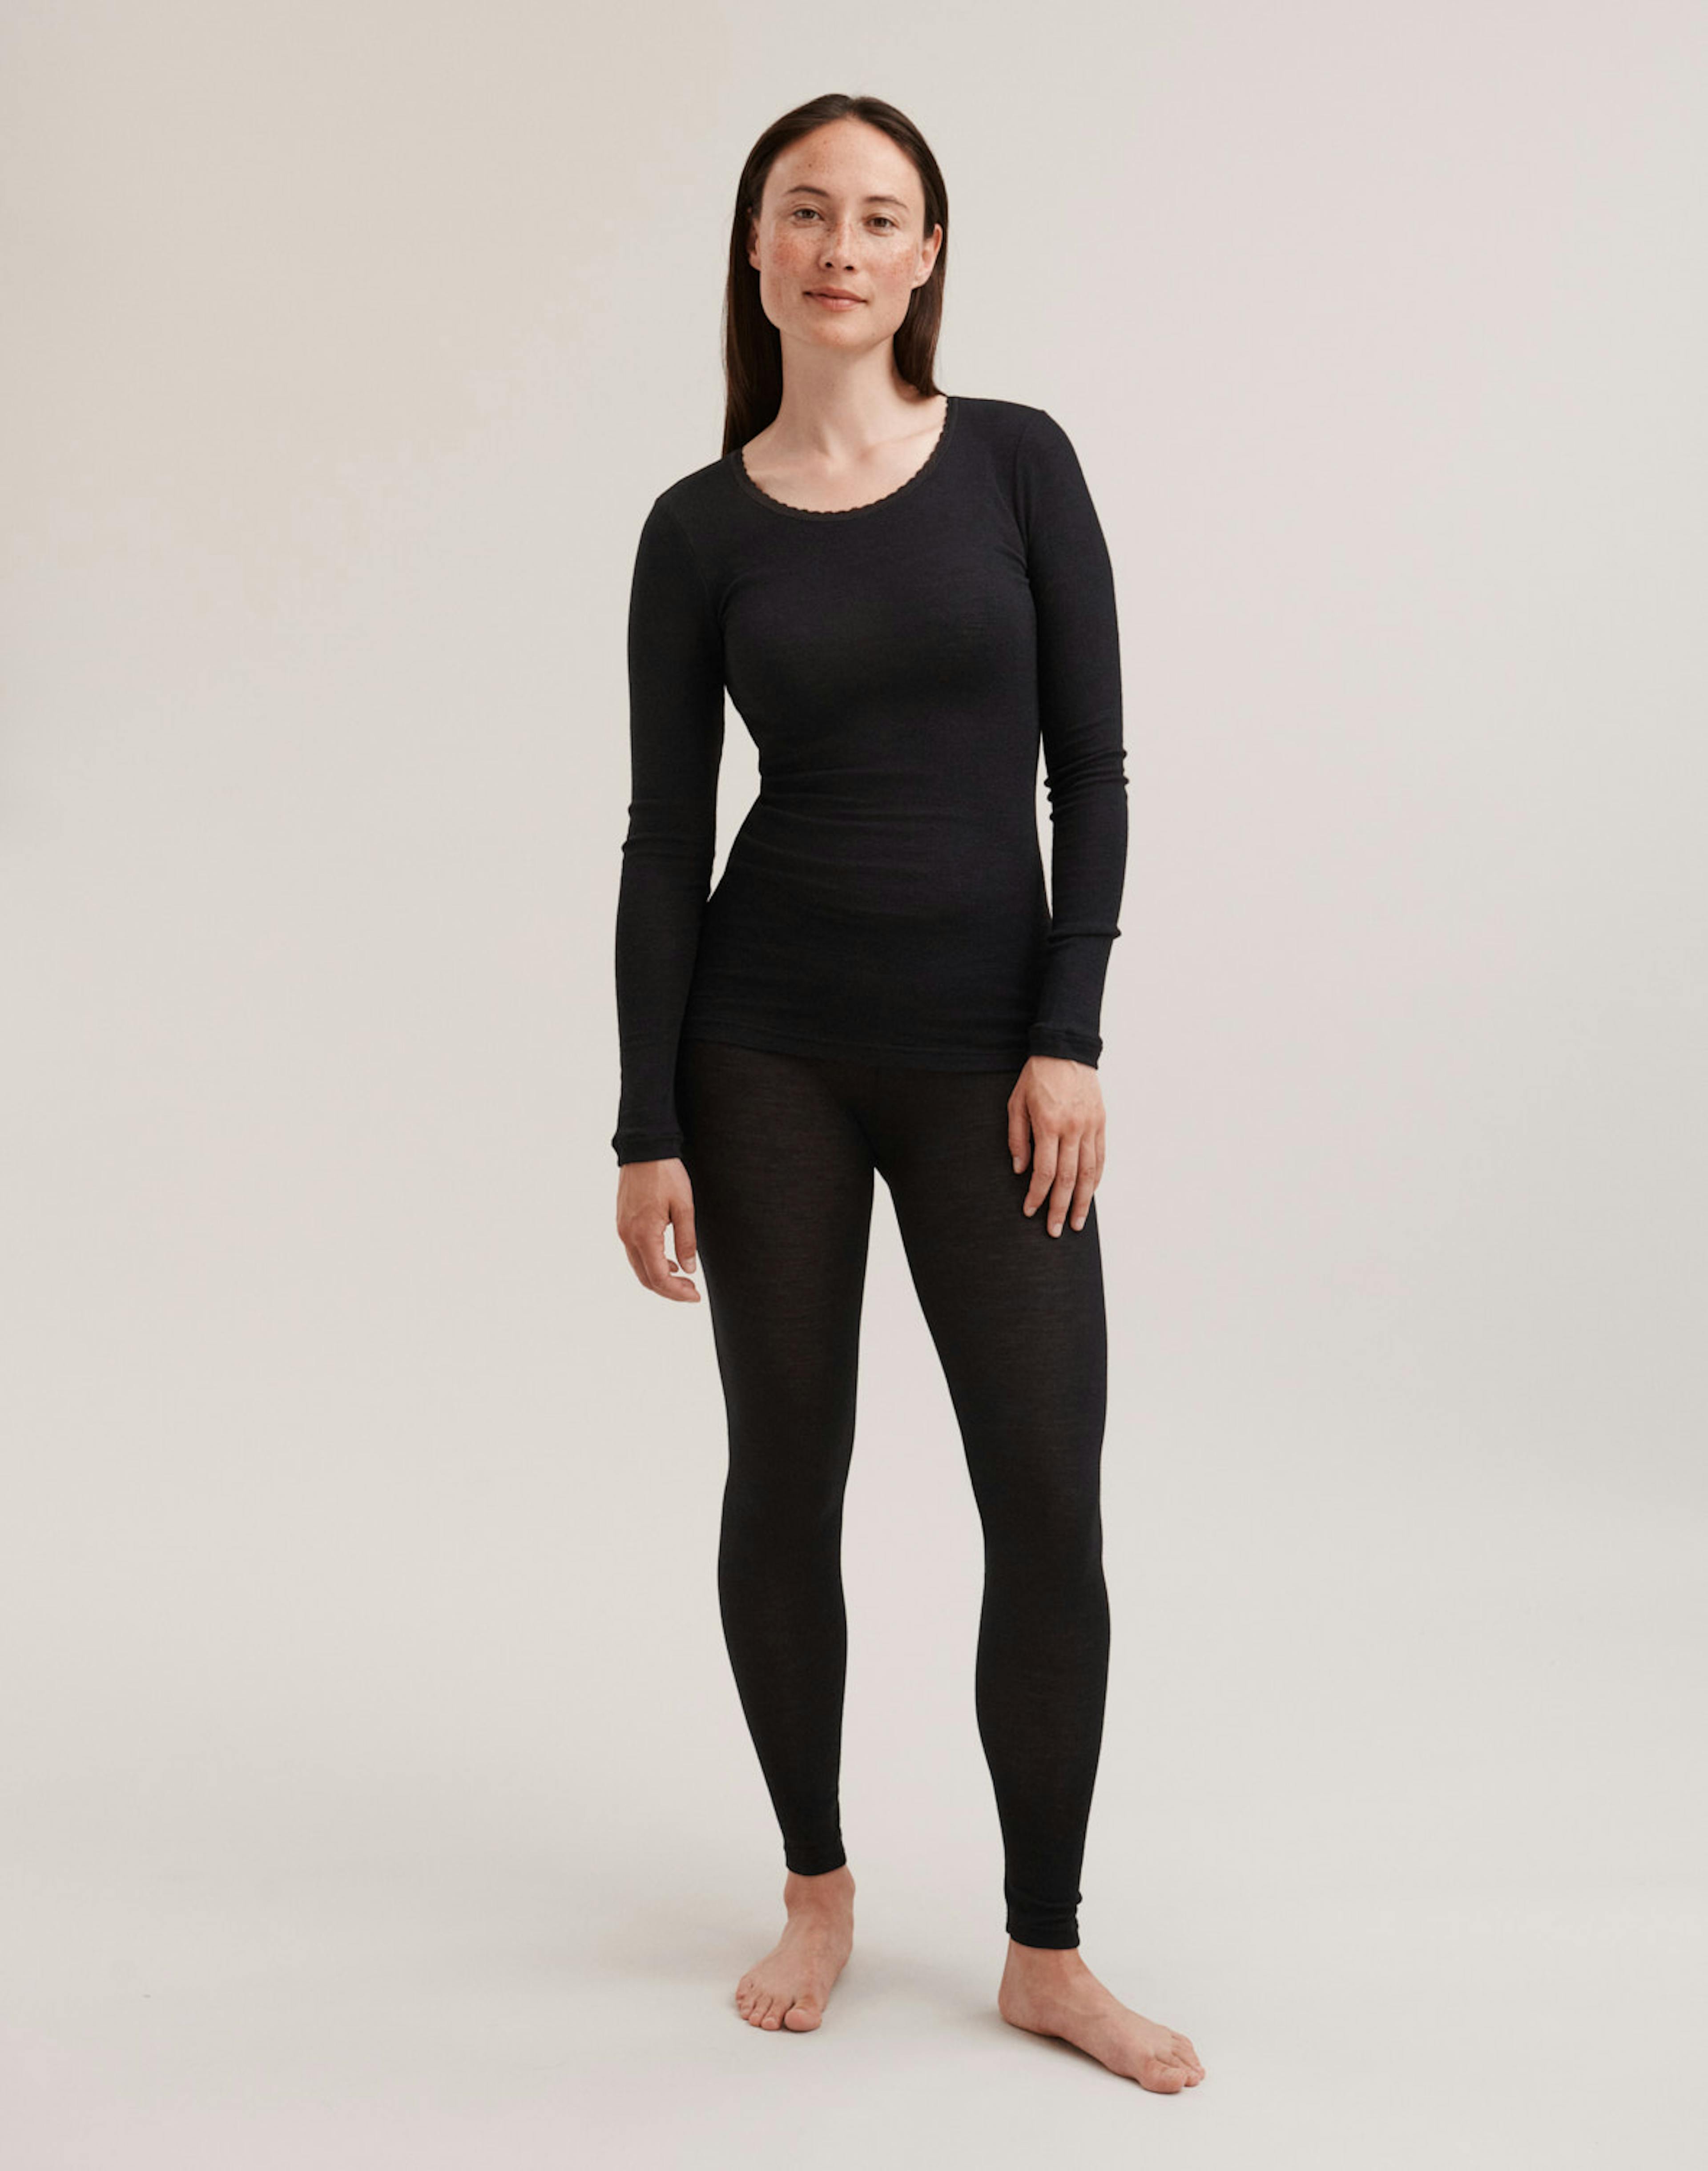 Women's merino wool/silk leggings - Black - Dilling